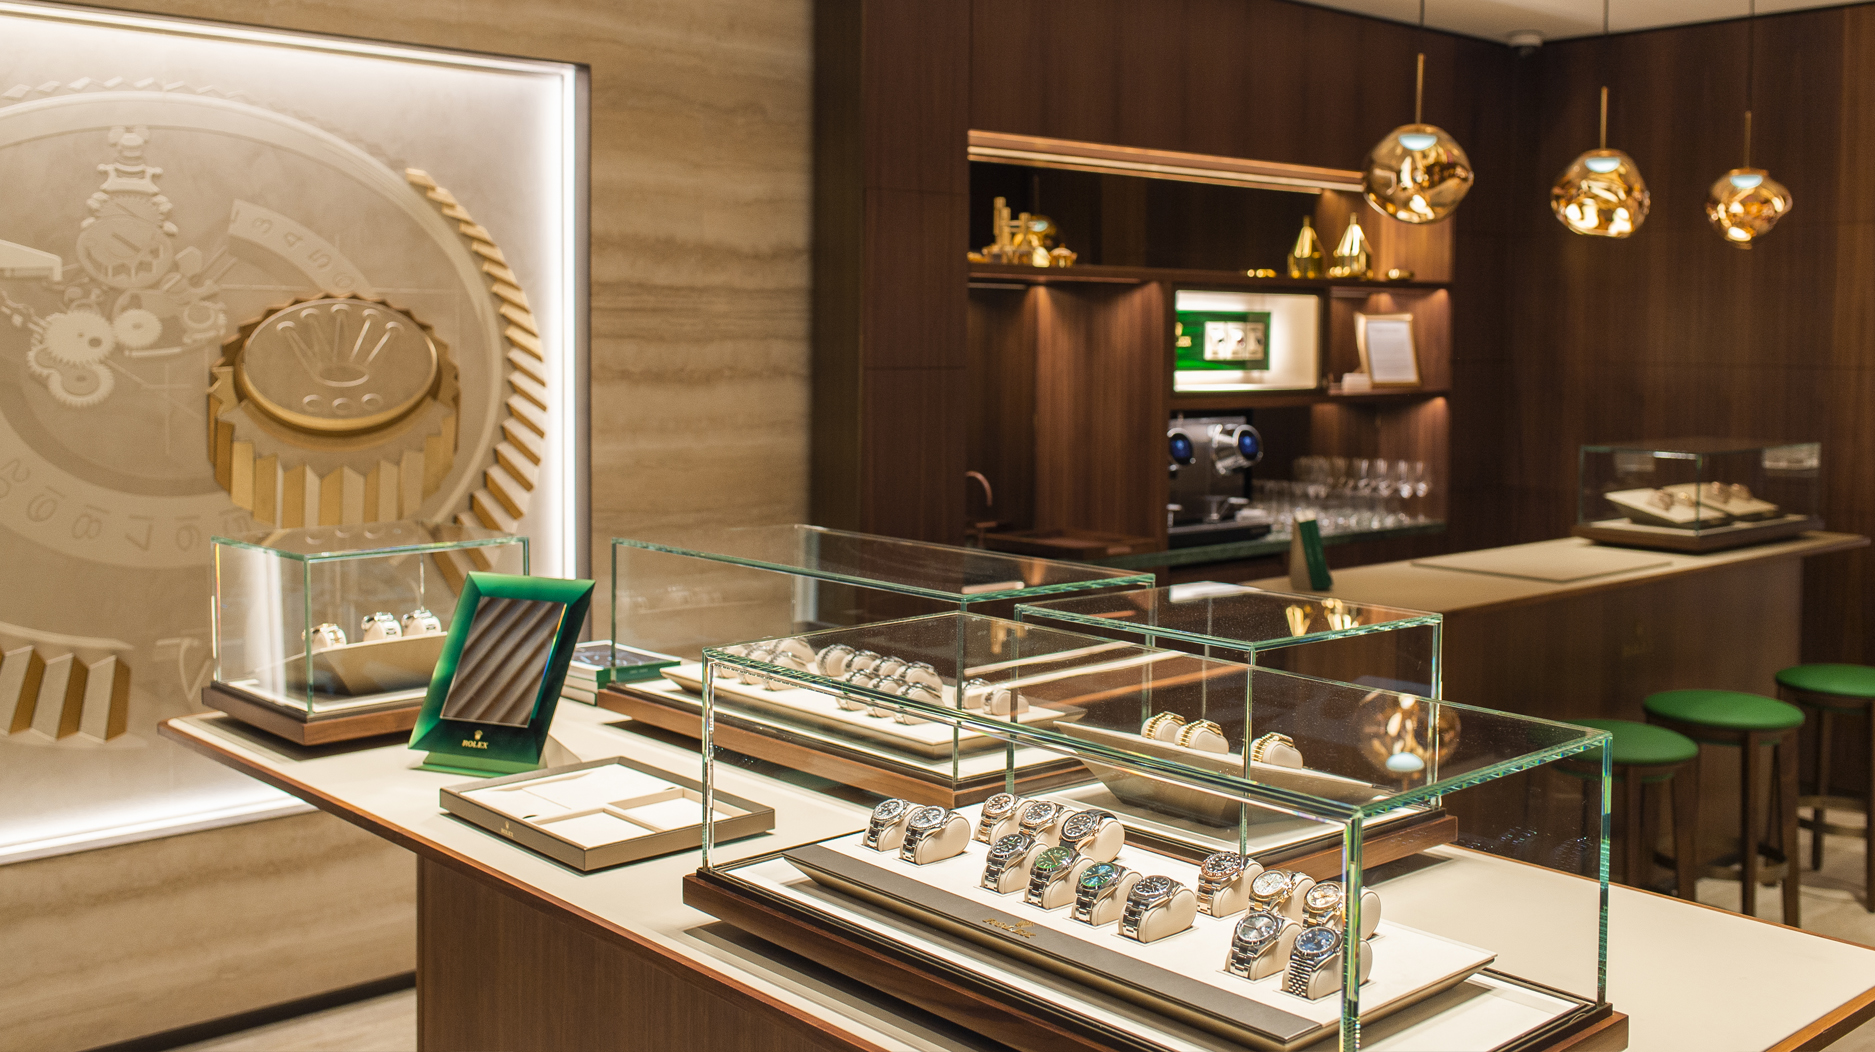 Long's Jewelers to open Patek Philippe watch showroom on Newbury Street's  'luxury row' - Boston Business Journal